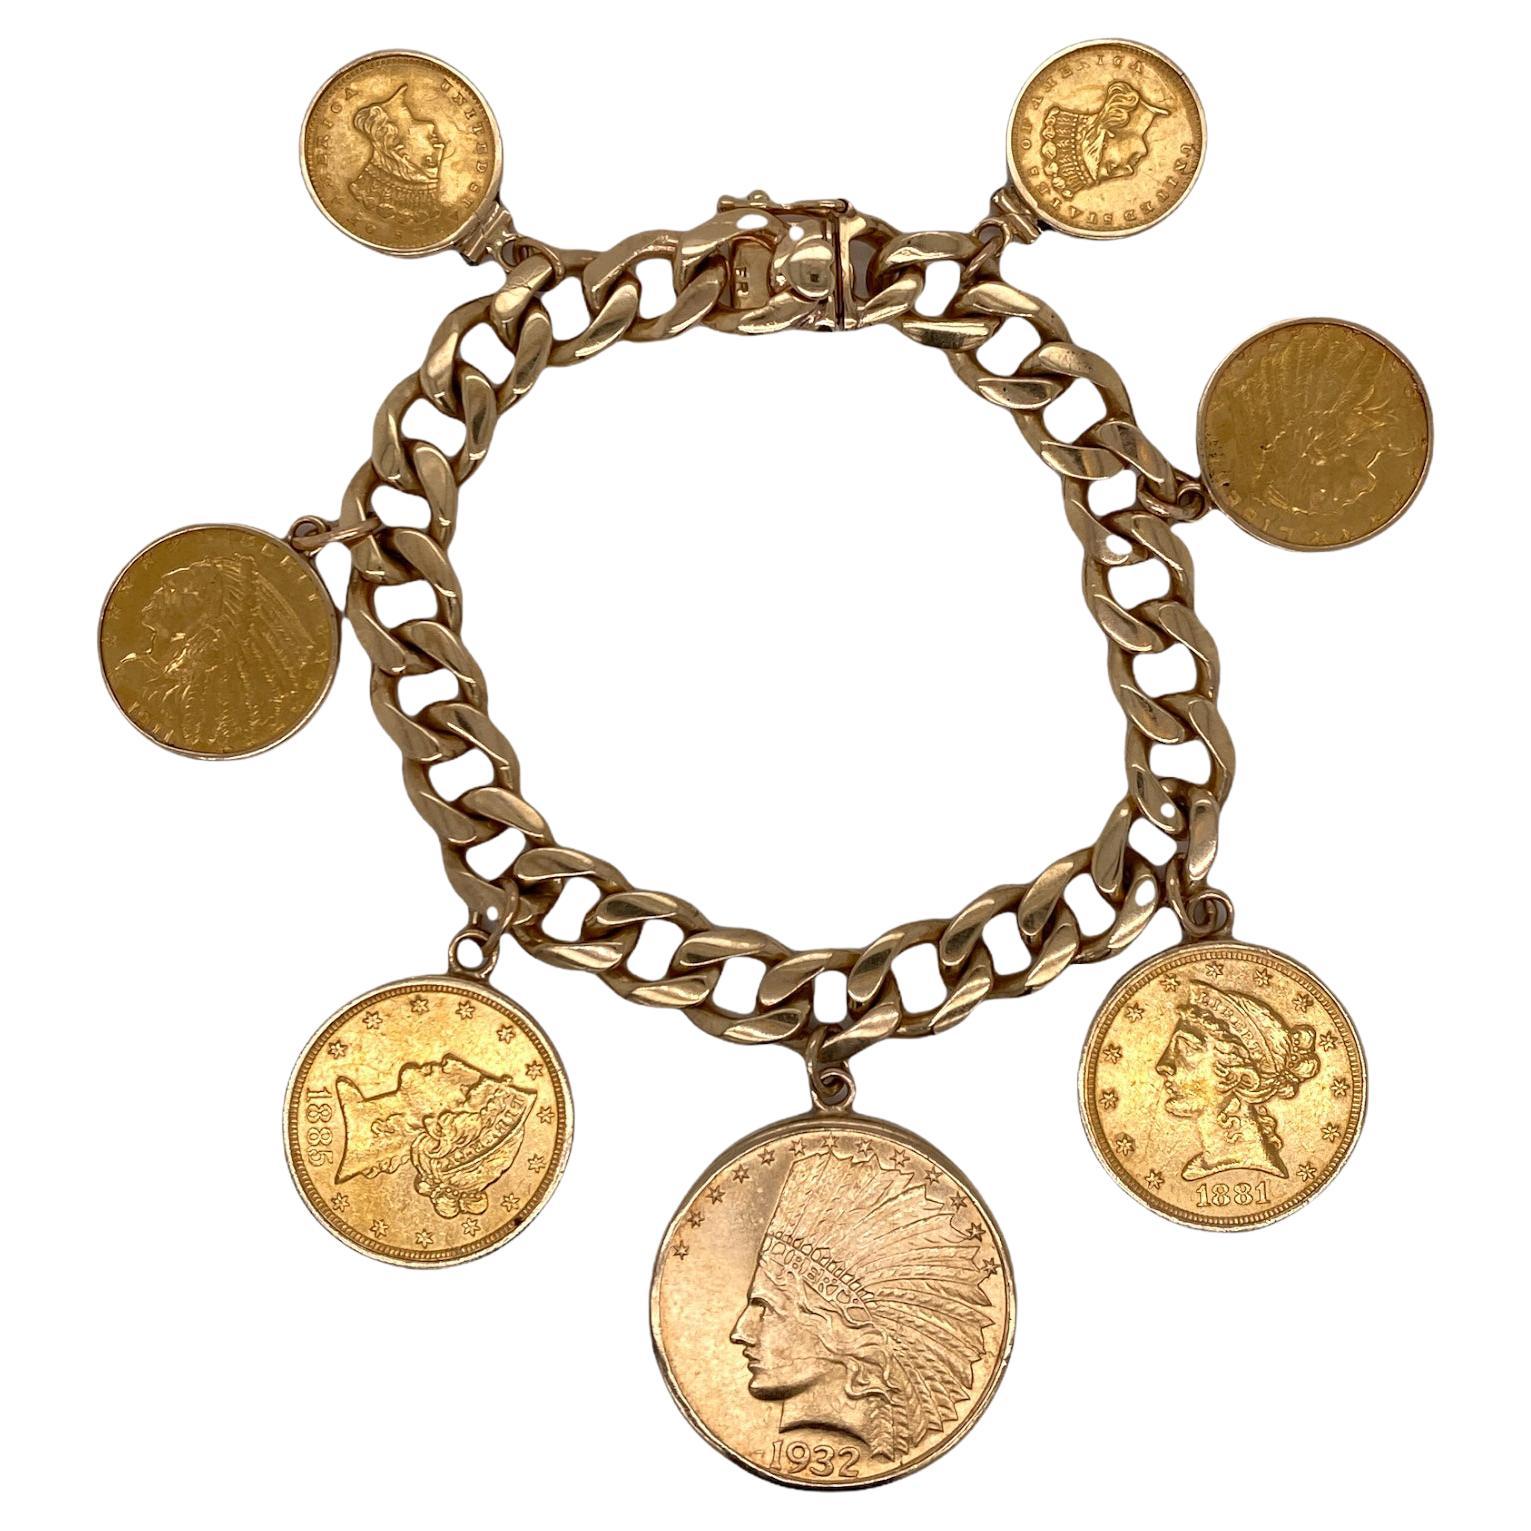 US Gold Coin Cuban Link Charm Vintage Bracelet 22k/ 14K Yellow Gold